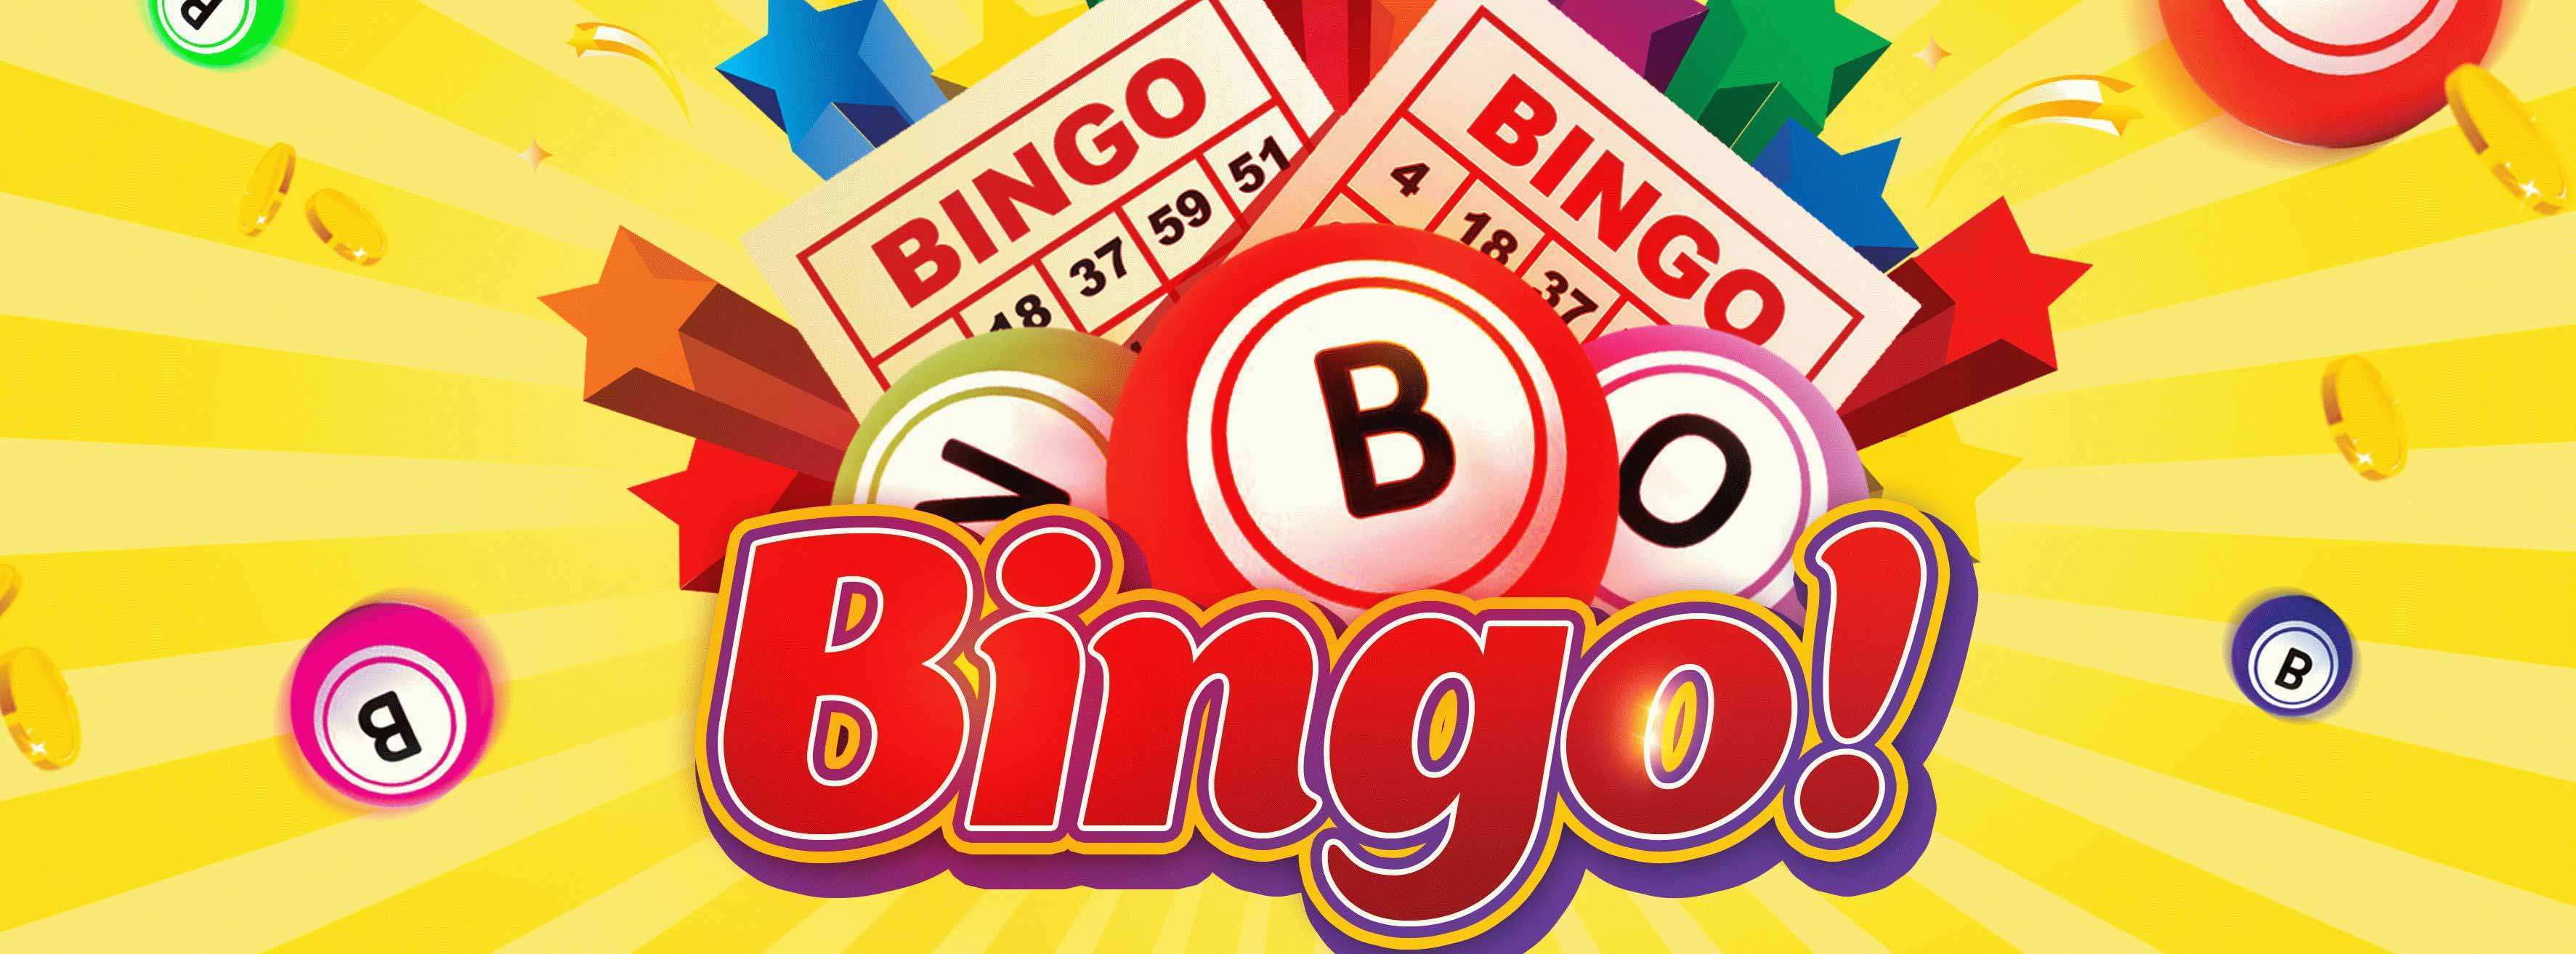 17 Blank Bingo Flyer Template Photo for Bingo Flyer Template